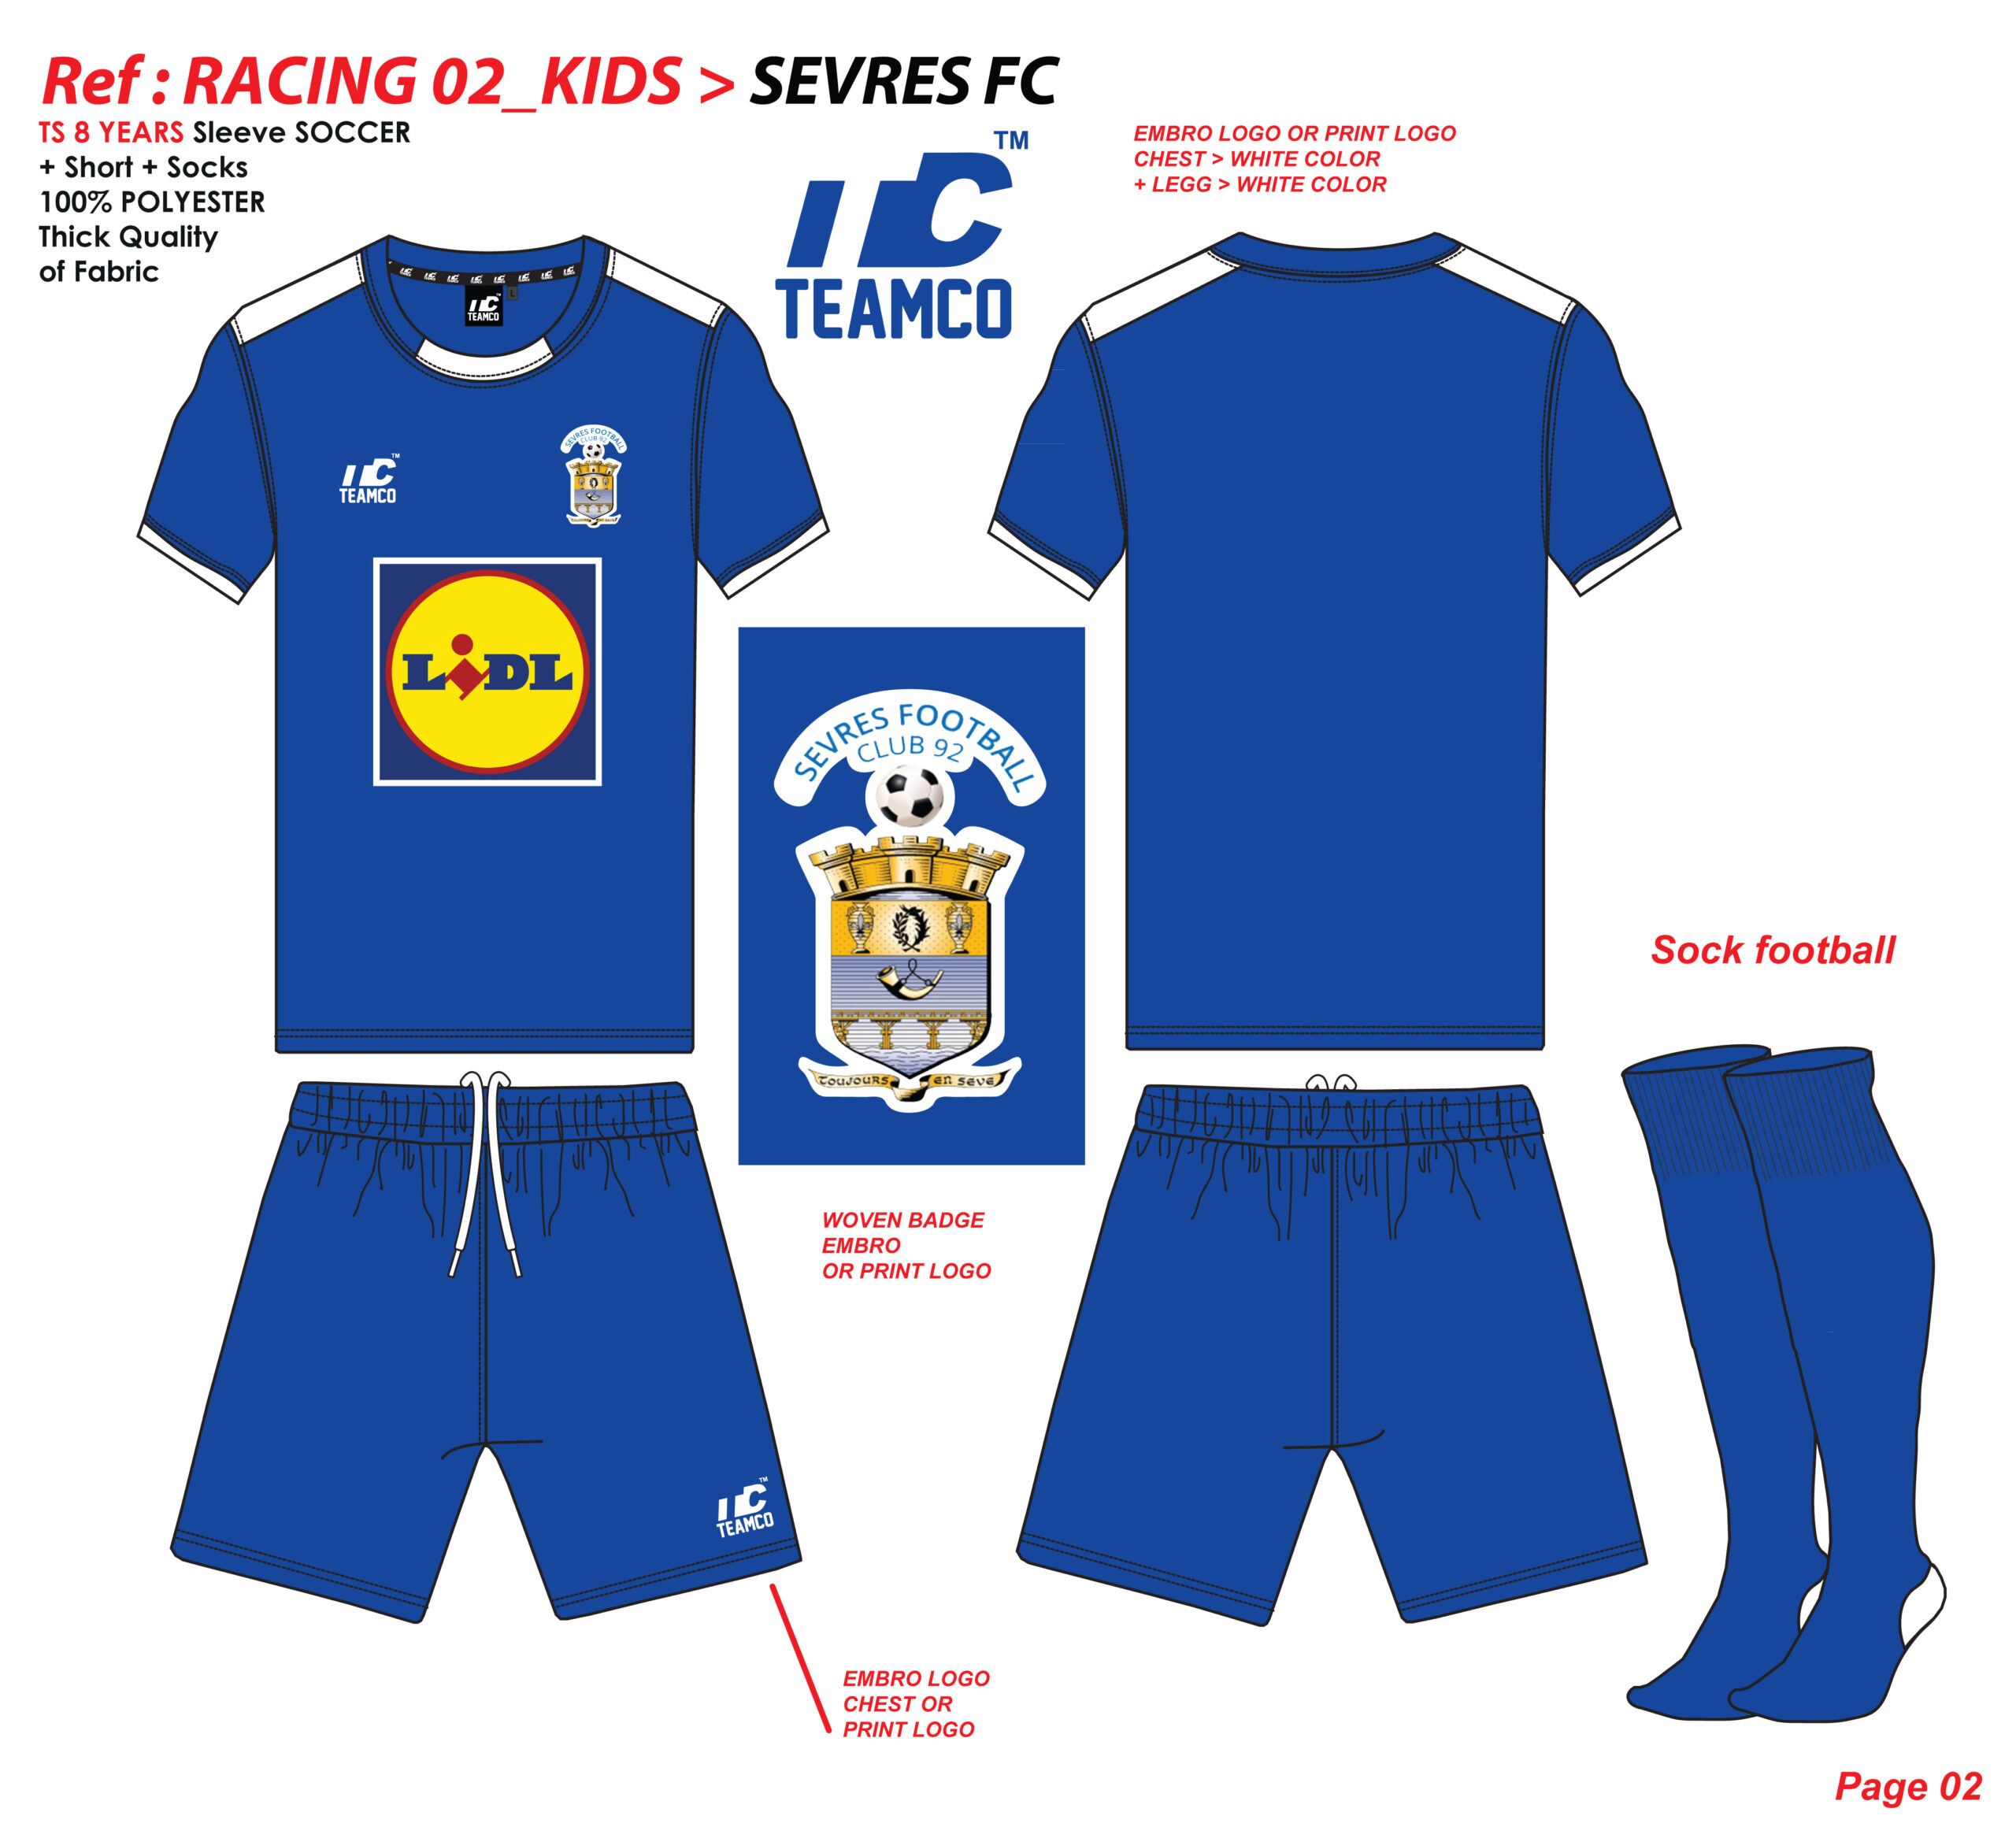 FT TS MC_REF RACING 02 KIDS_SEVRES FC